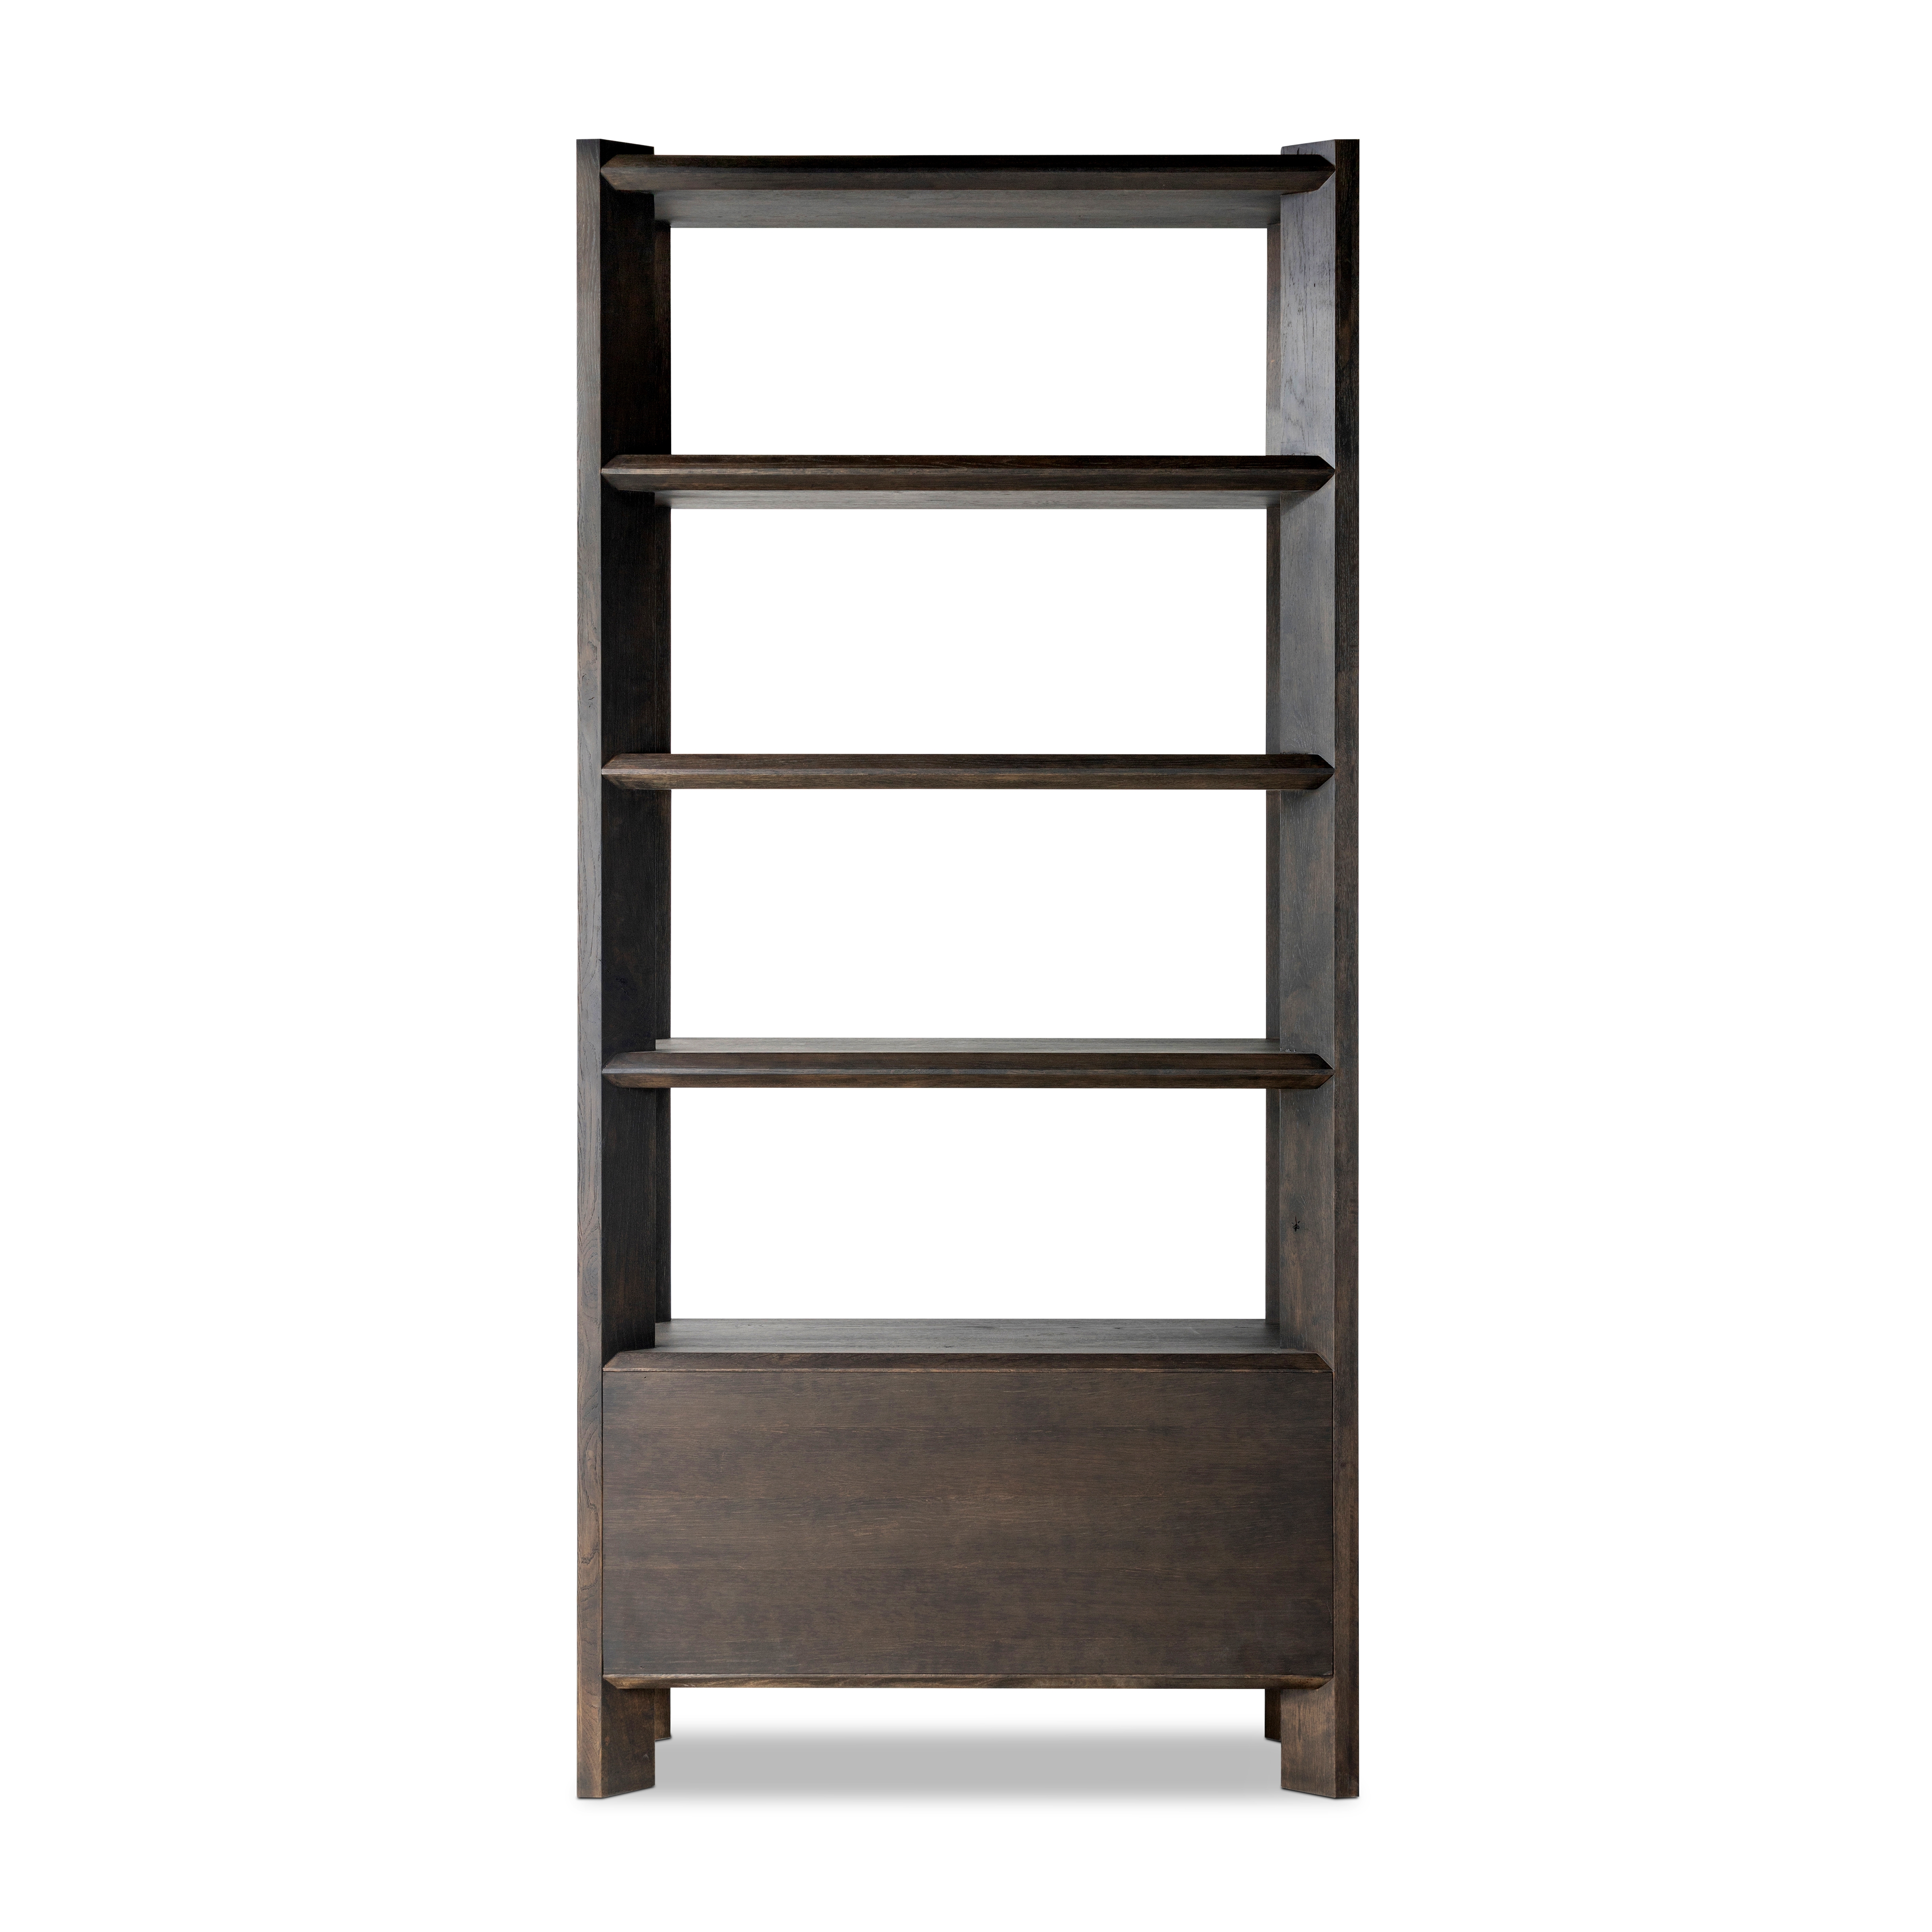 Orwin Bookshelf-Smoked Black Oak - Image 6